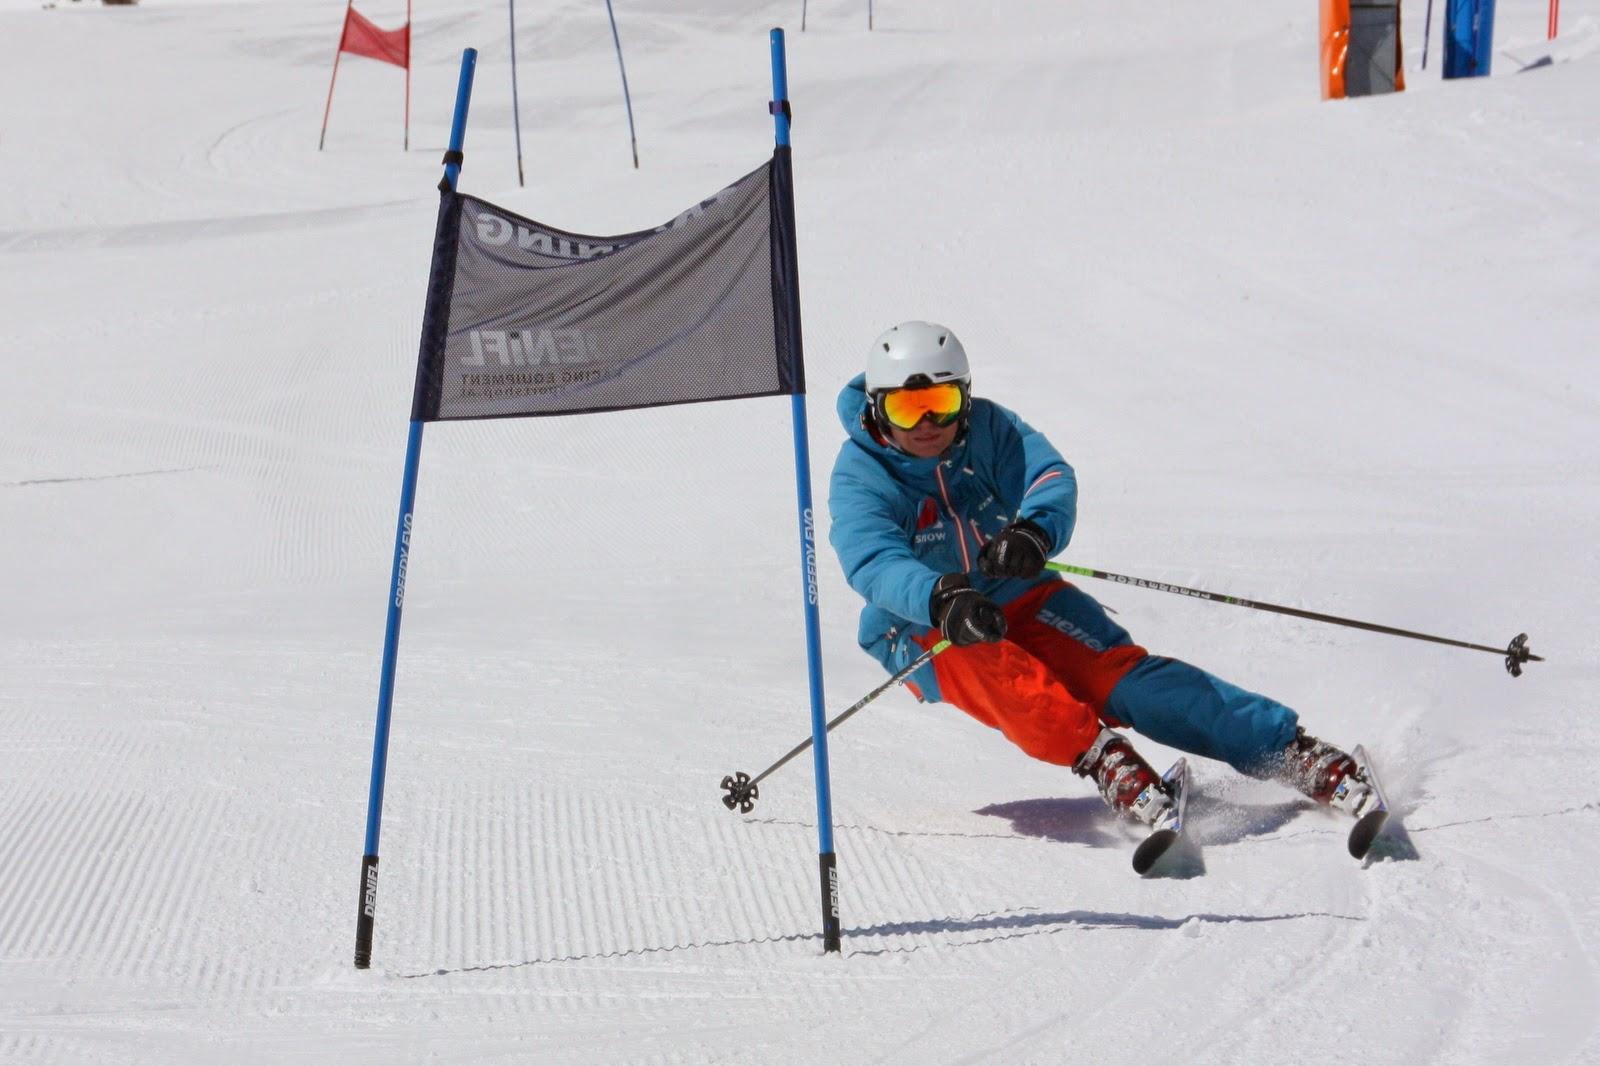 Perjalanan ski. Bagaimana untuk mengemas ski, papan salji? Apa yang perlu diingat?